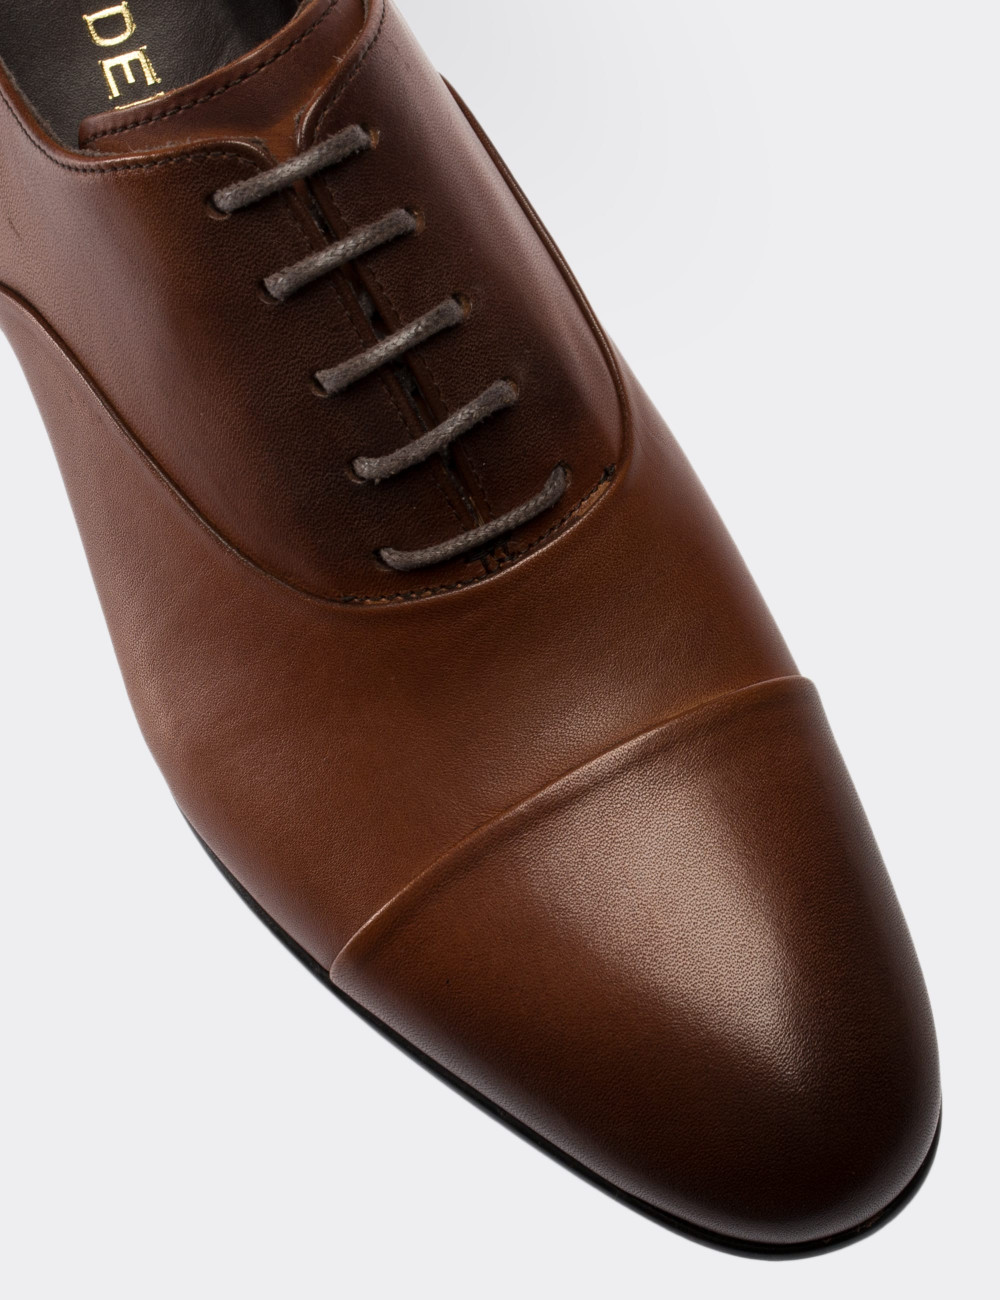 Tan  Leather Classic Shoes - 01026MTBAC02